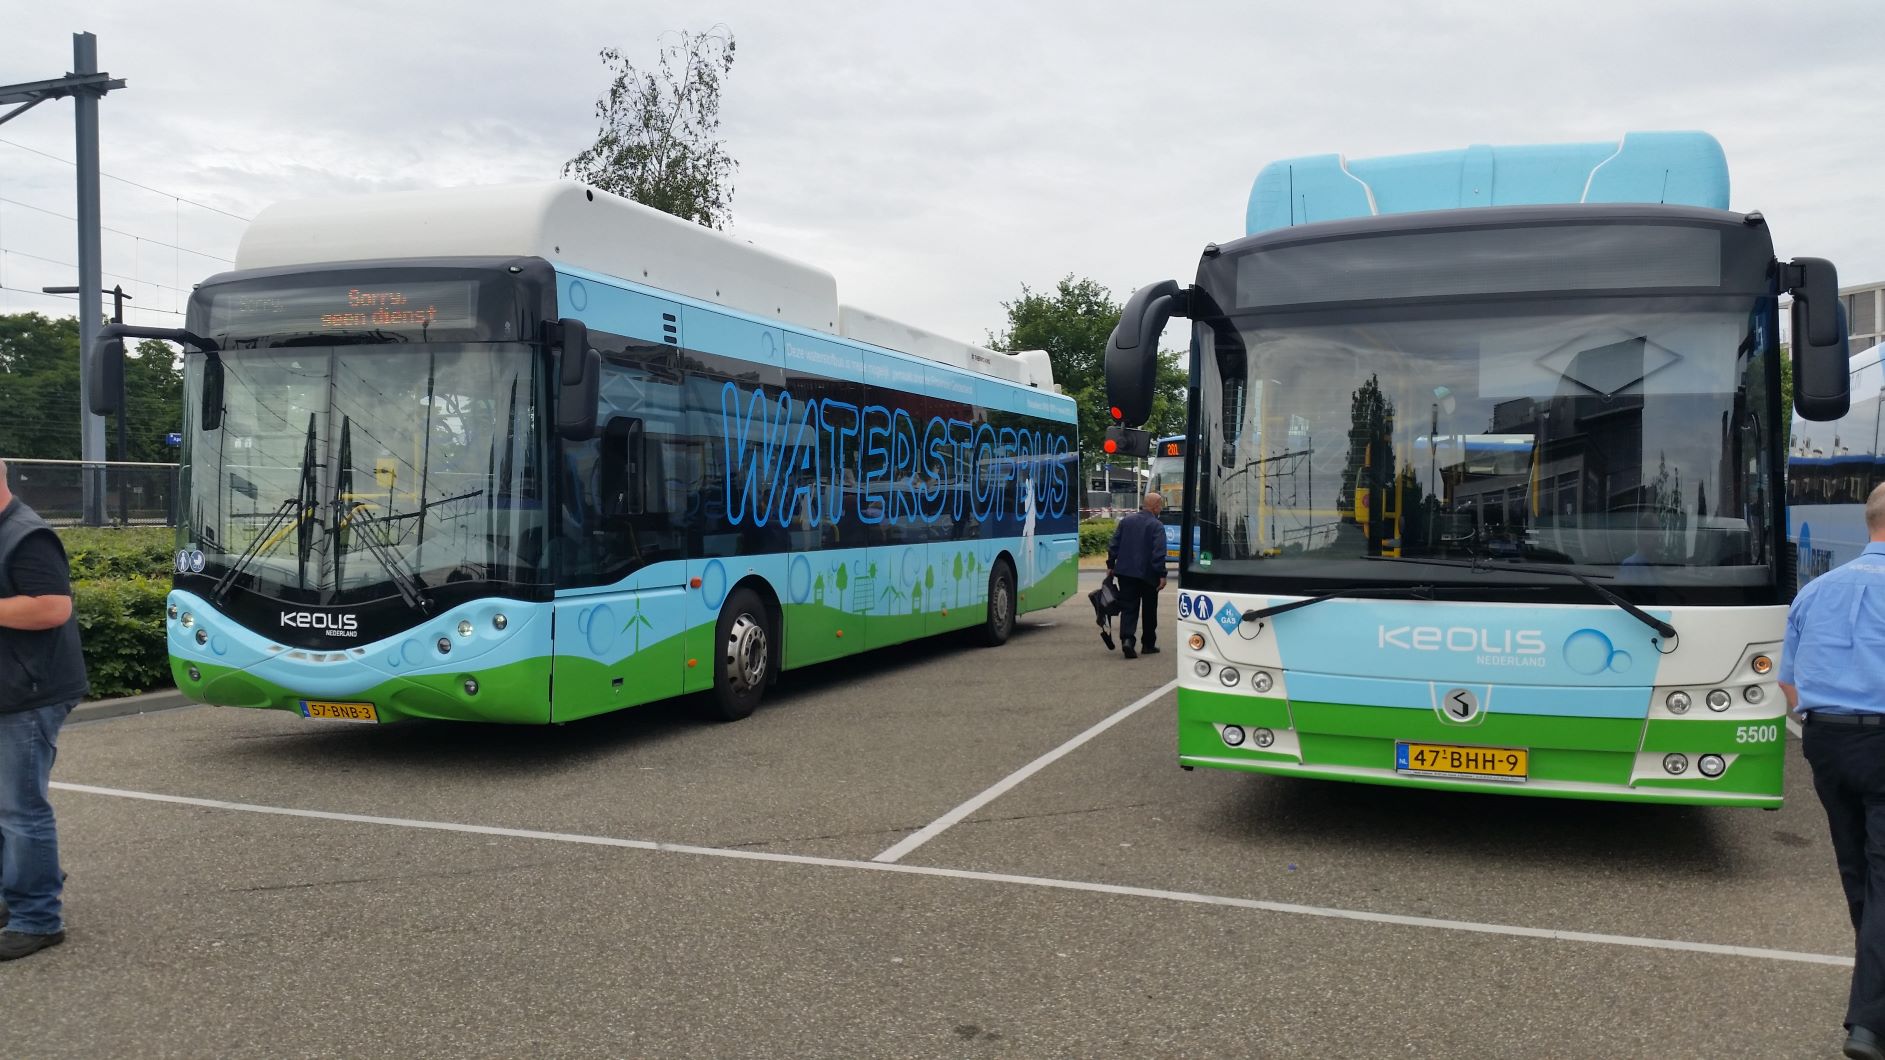 Waterstofbussen in Gelderse dienstregeling Keolis presteren uitstekend